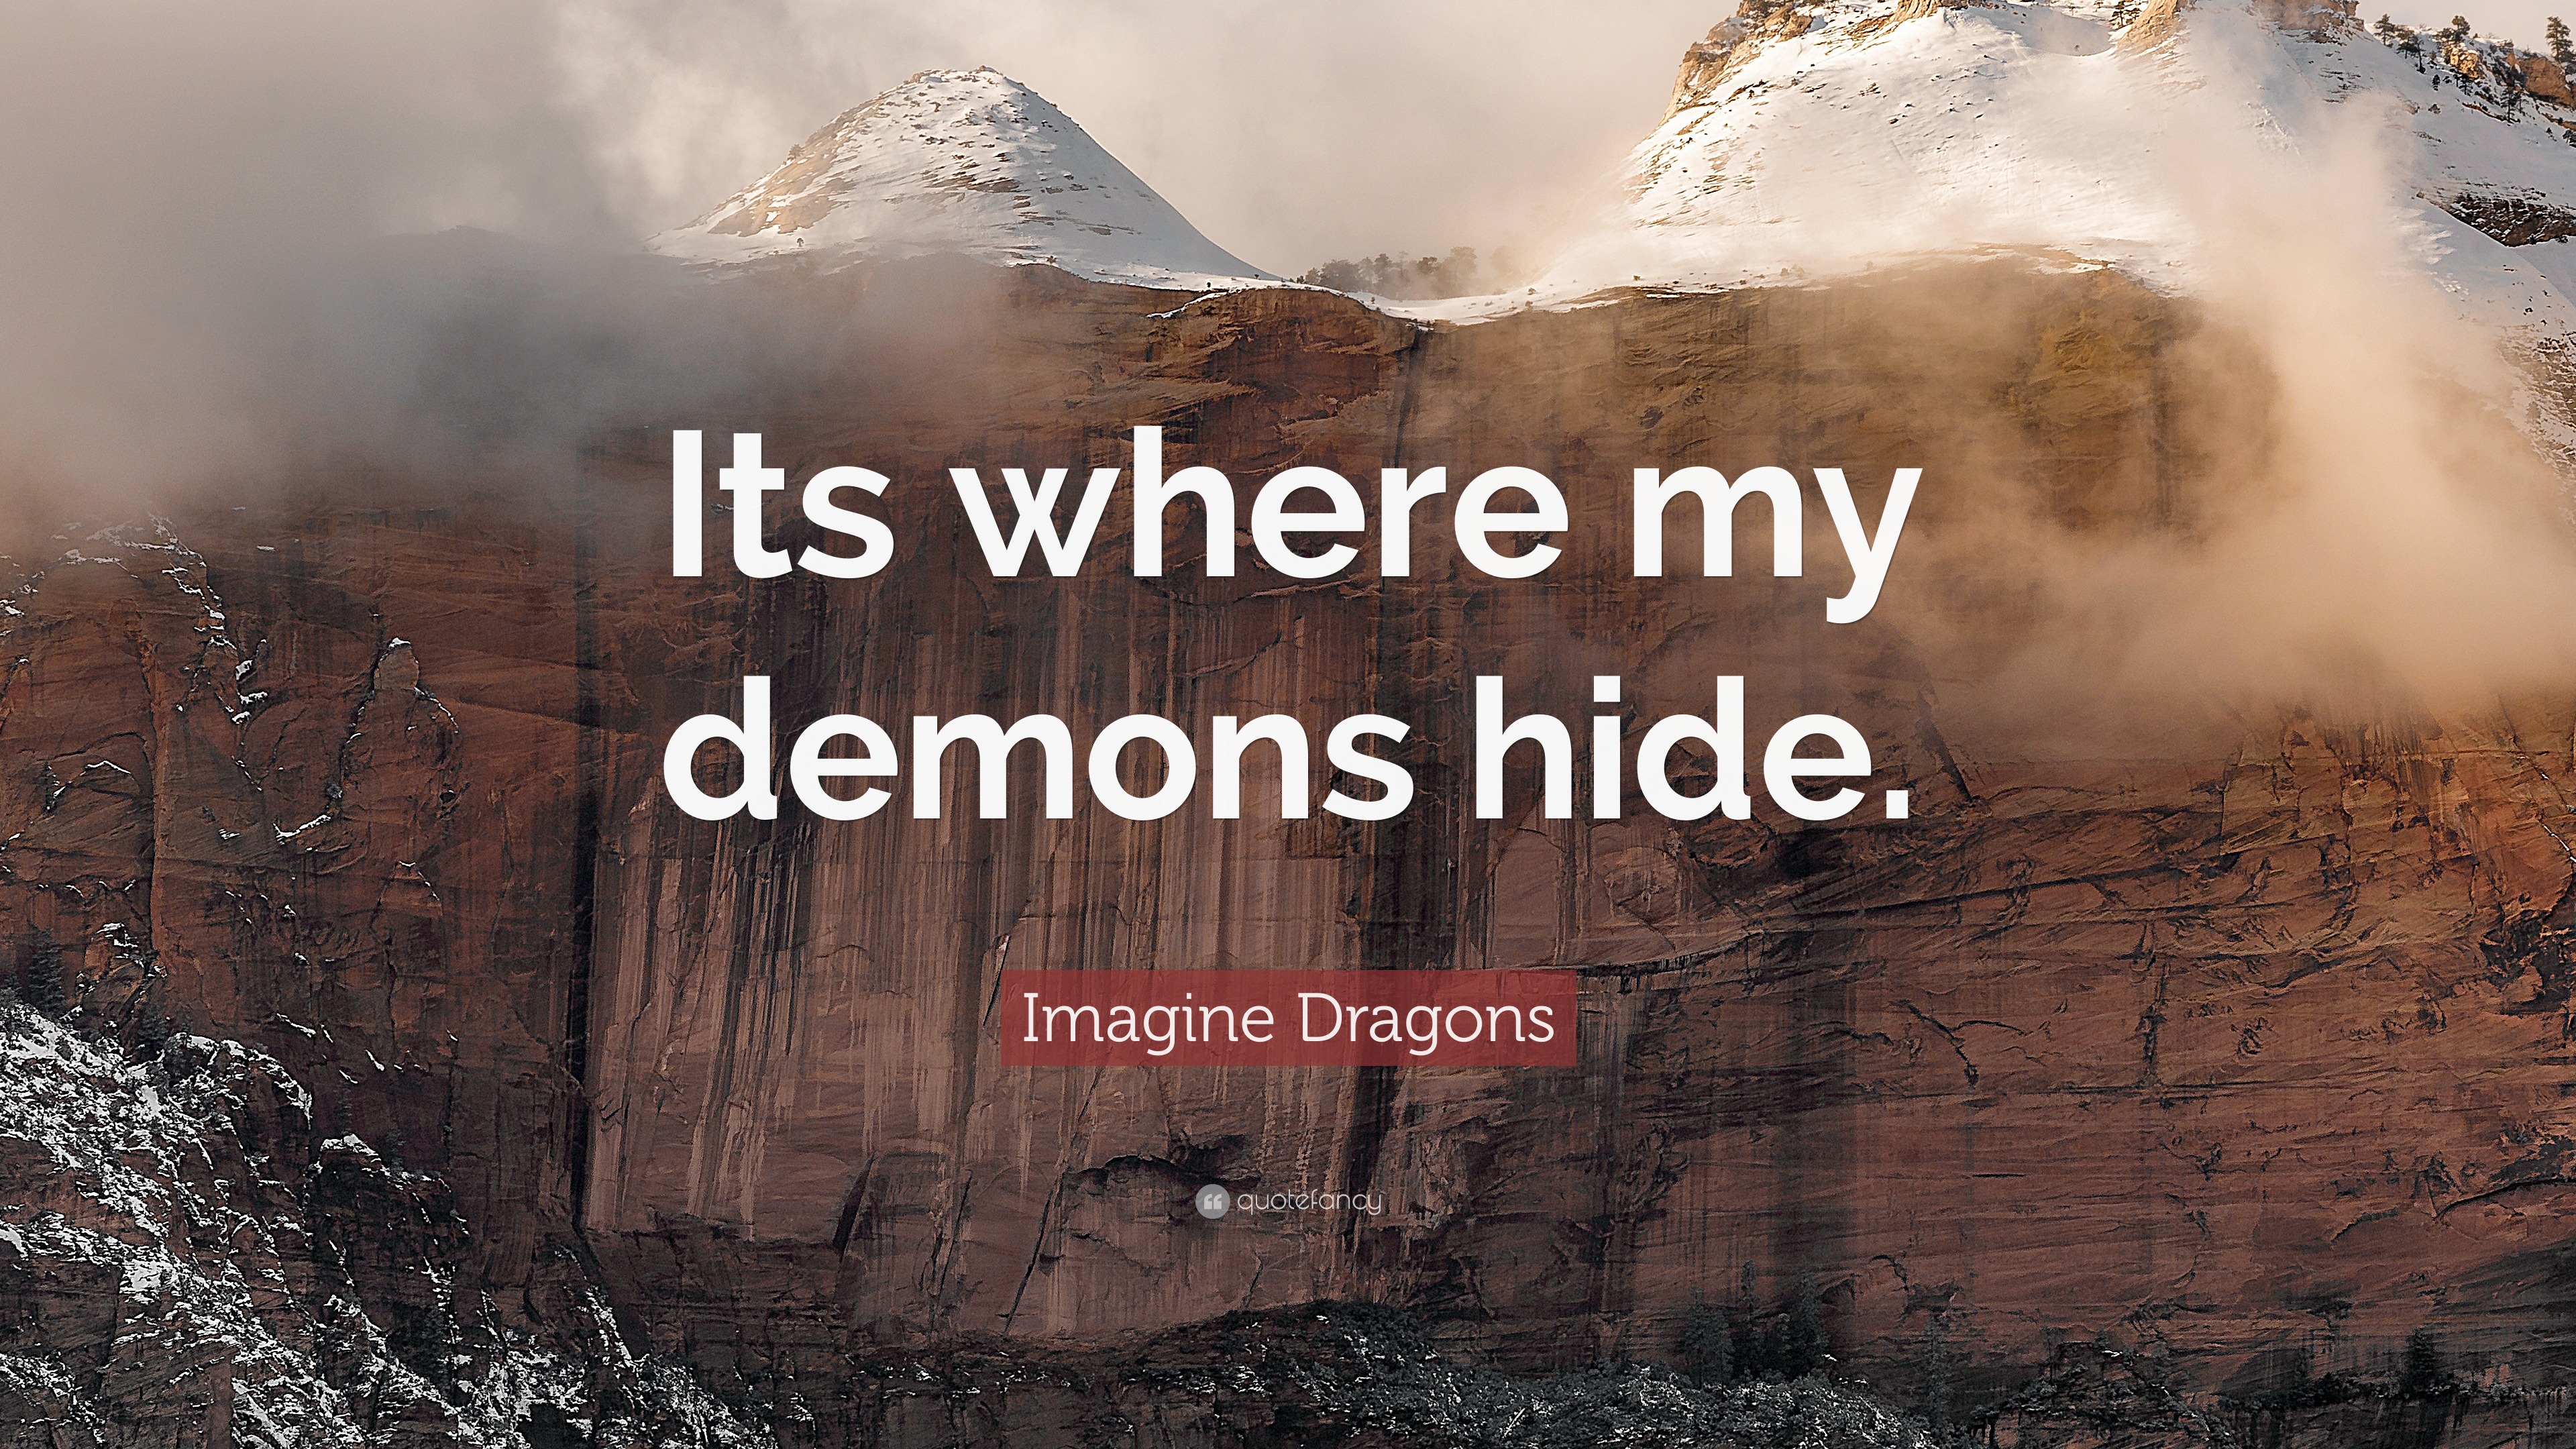 imagine dragons demons background